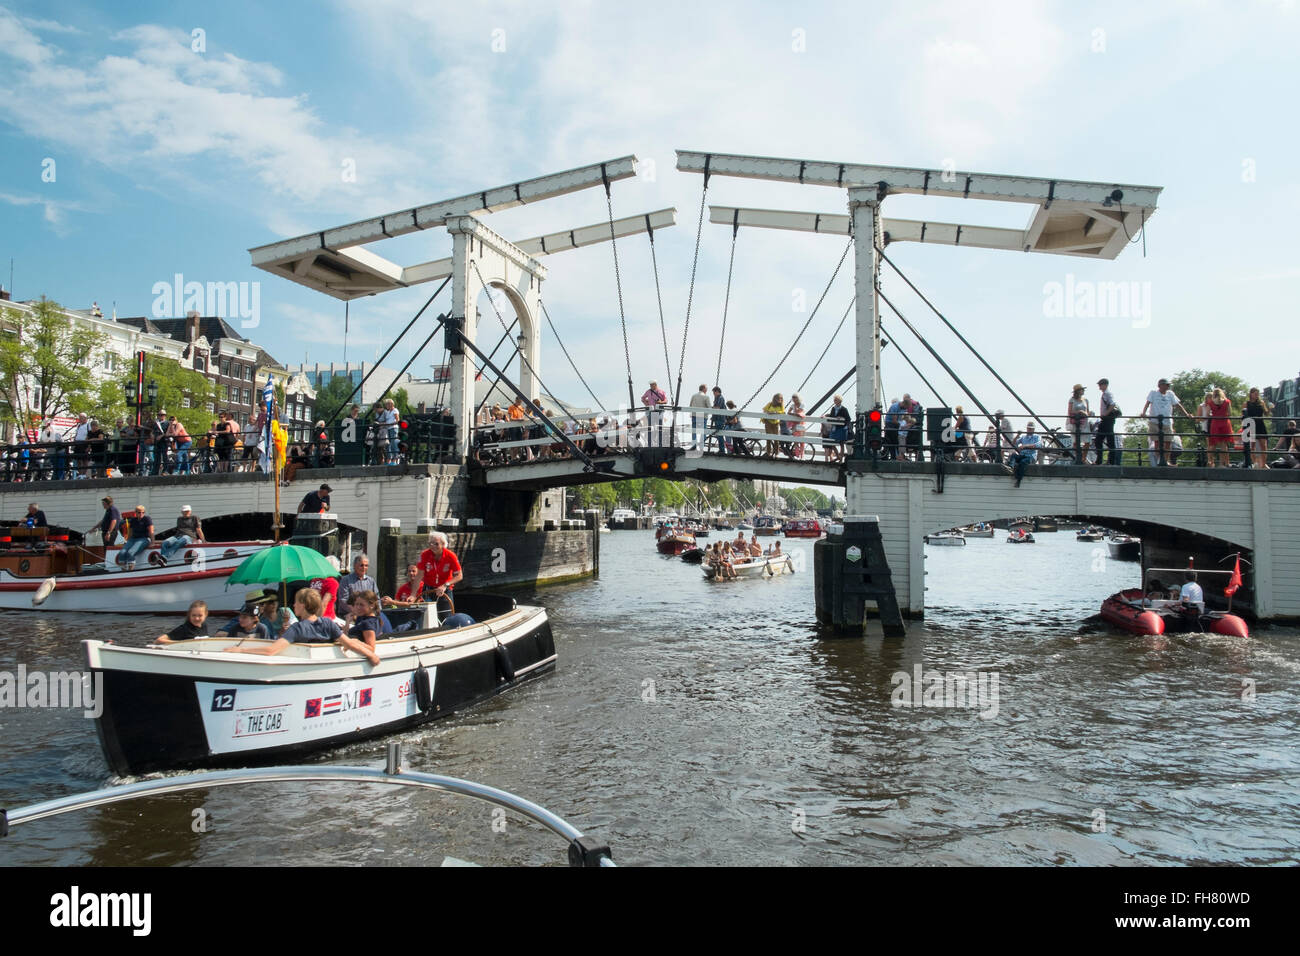 Magere Brug - Skinny bridge. Sail 2015. Amstel river, Amsterdam Stock Photo